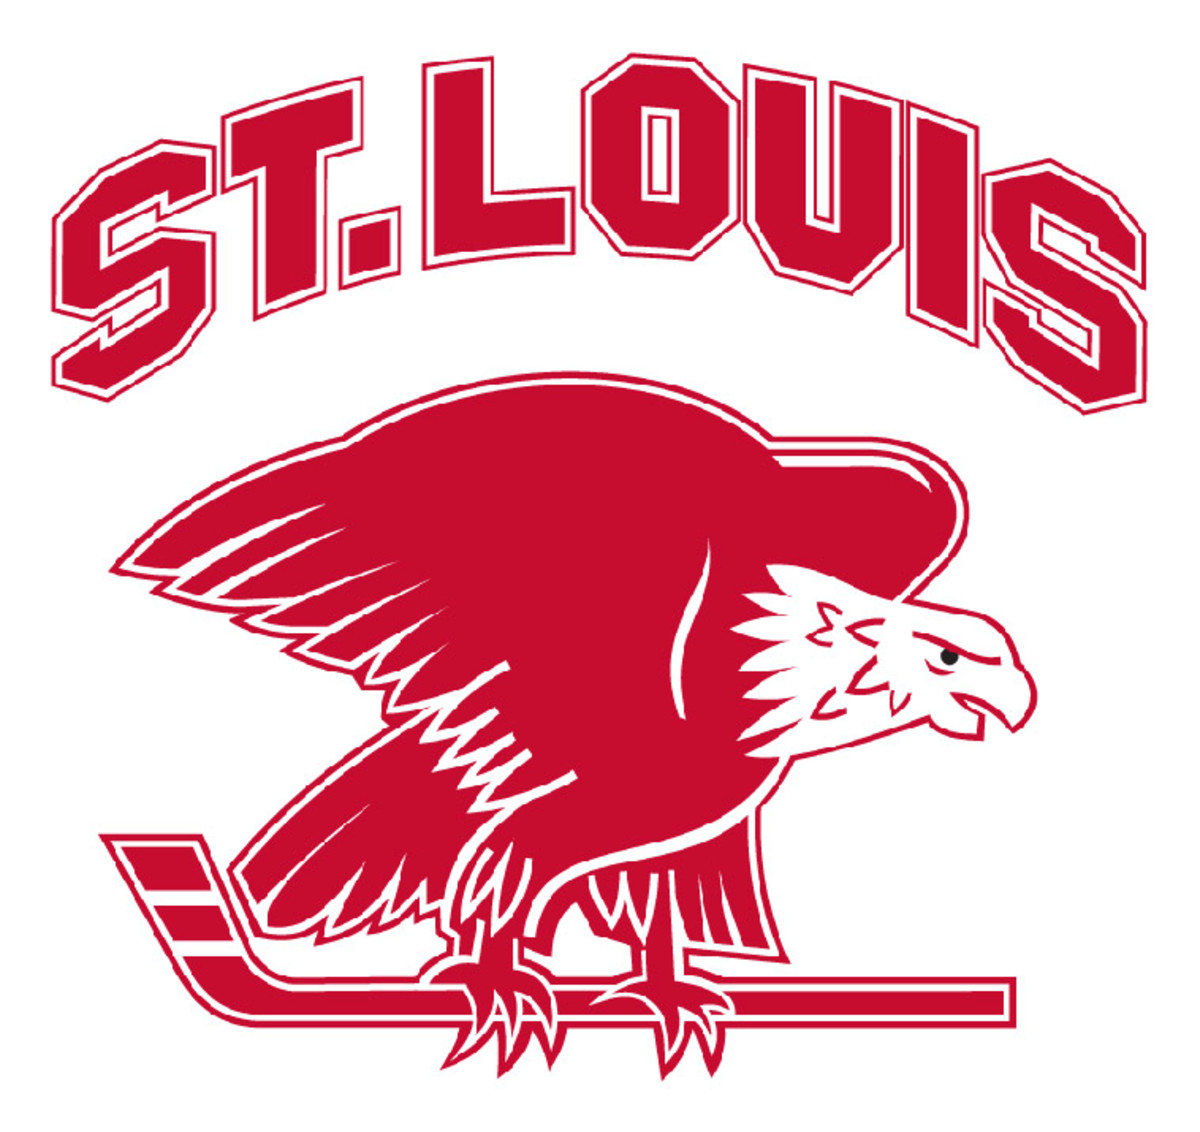 St-Louis-Eagles-logo-1934-35.jpg